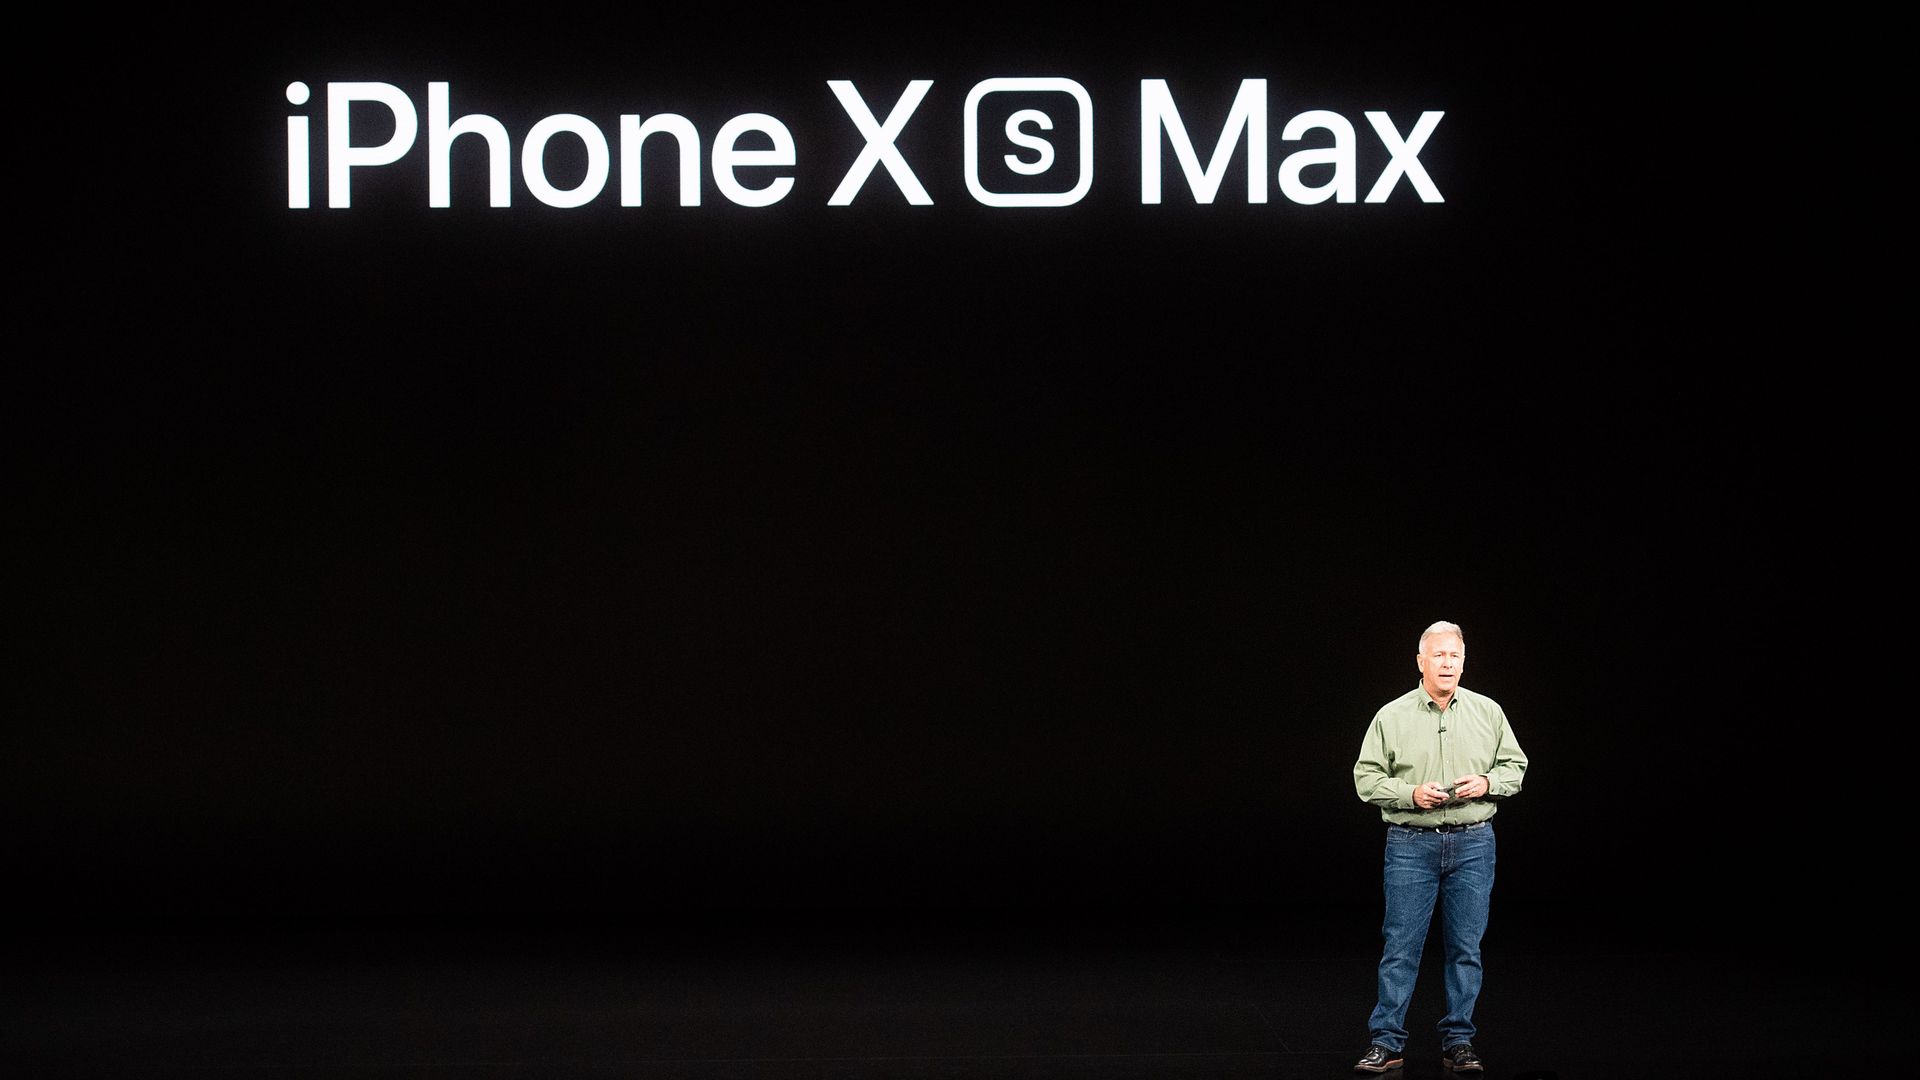 iPhone XS max event